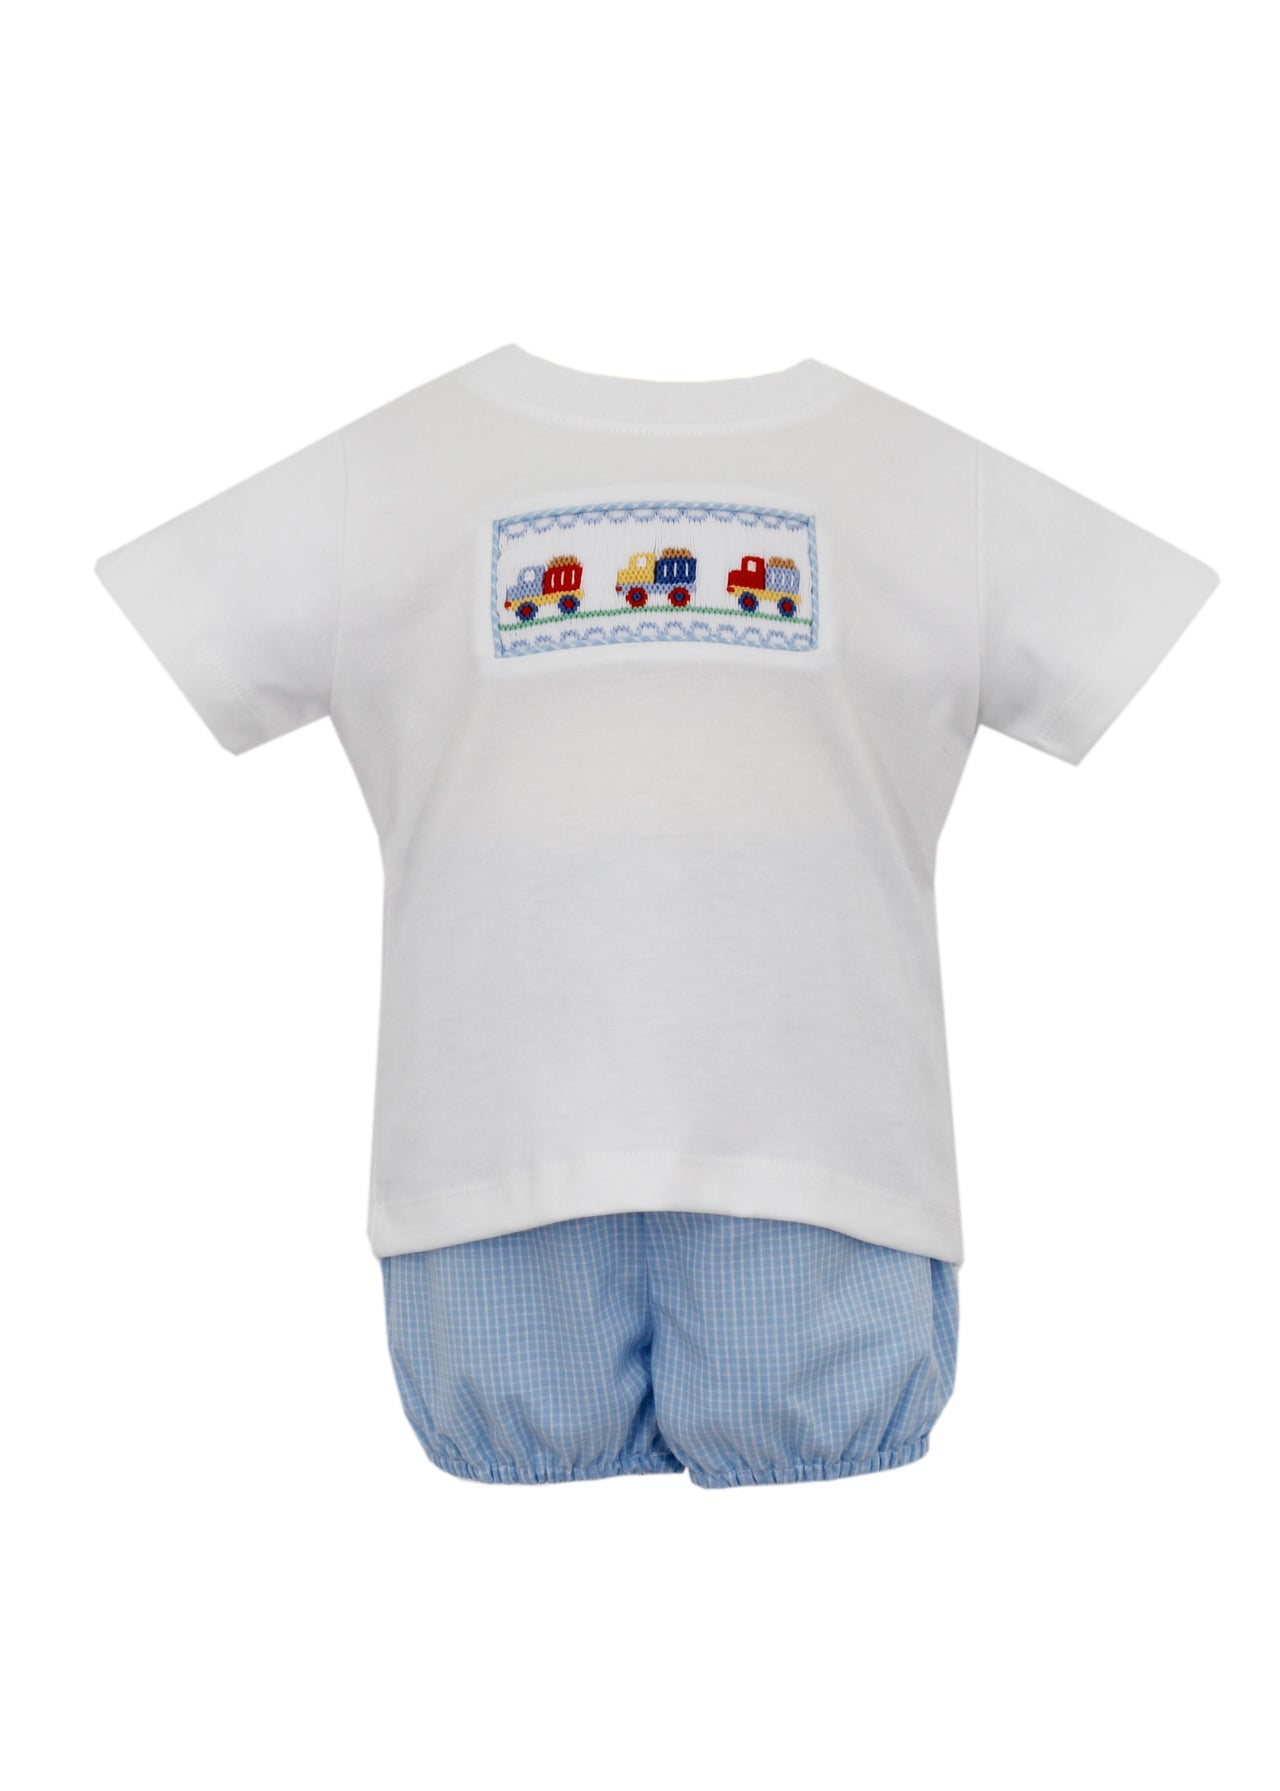 Petit Bebe Dumptrucks Boy's White T-Shirt Bloomer Set Blue Check 131M-MS24 5102